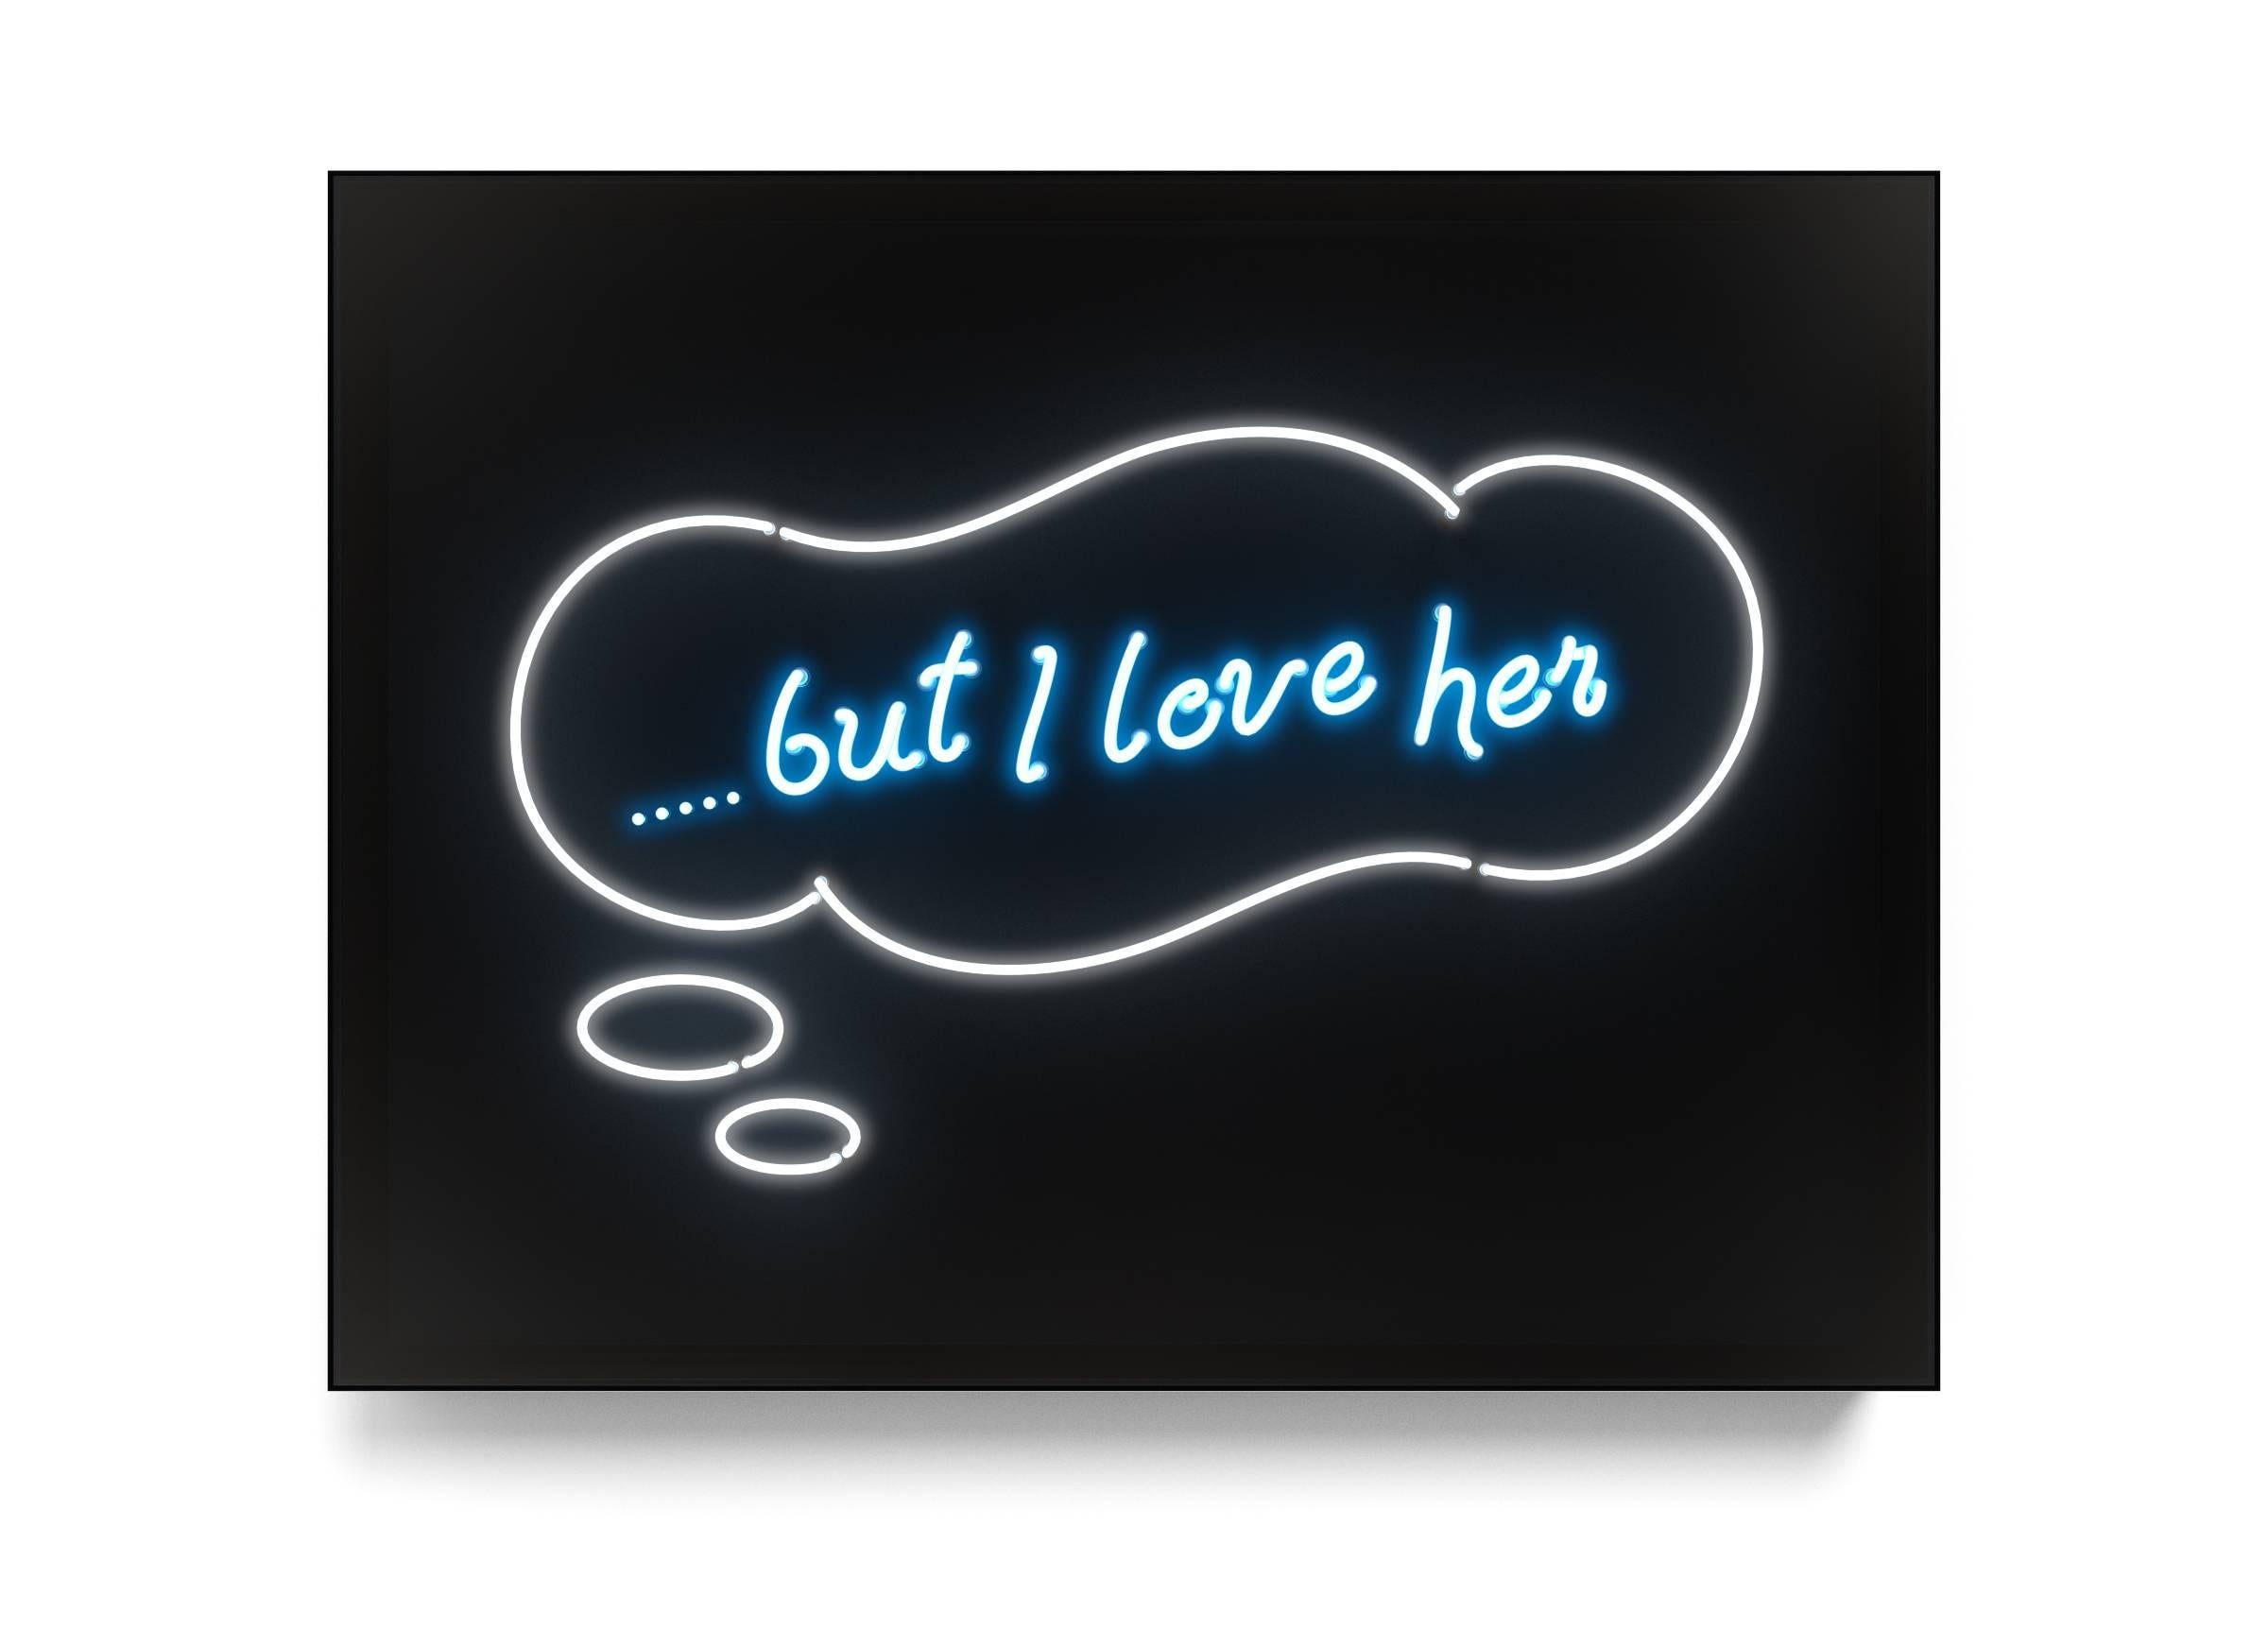 But I love her - Contemporary Art by David Drebin